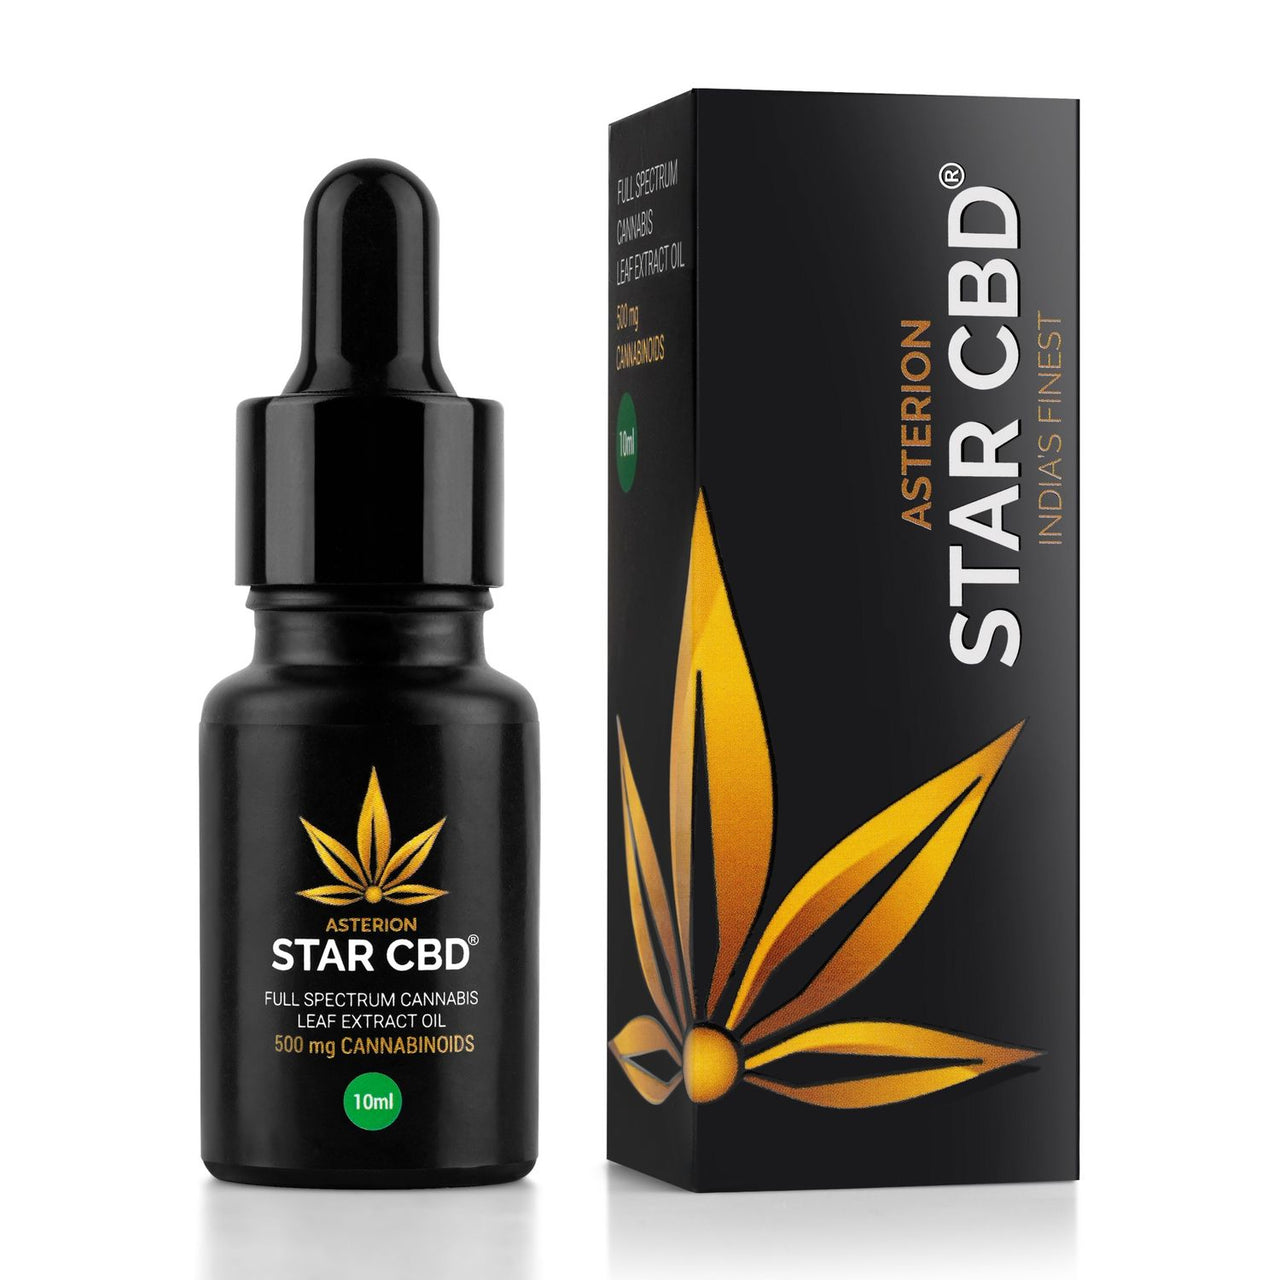 StarCBD- Full Spectrum Cannabis Leaf Extract Oil - 500mg